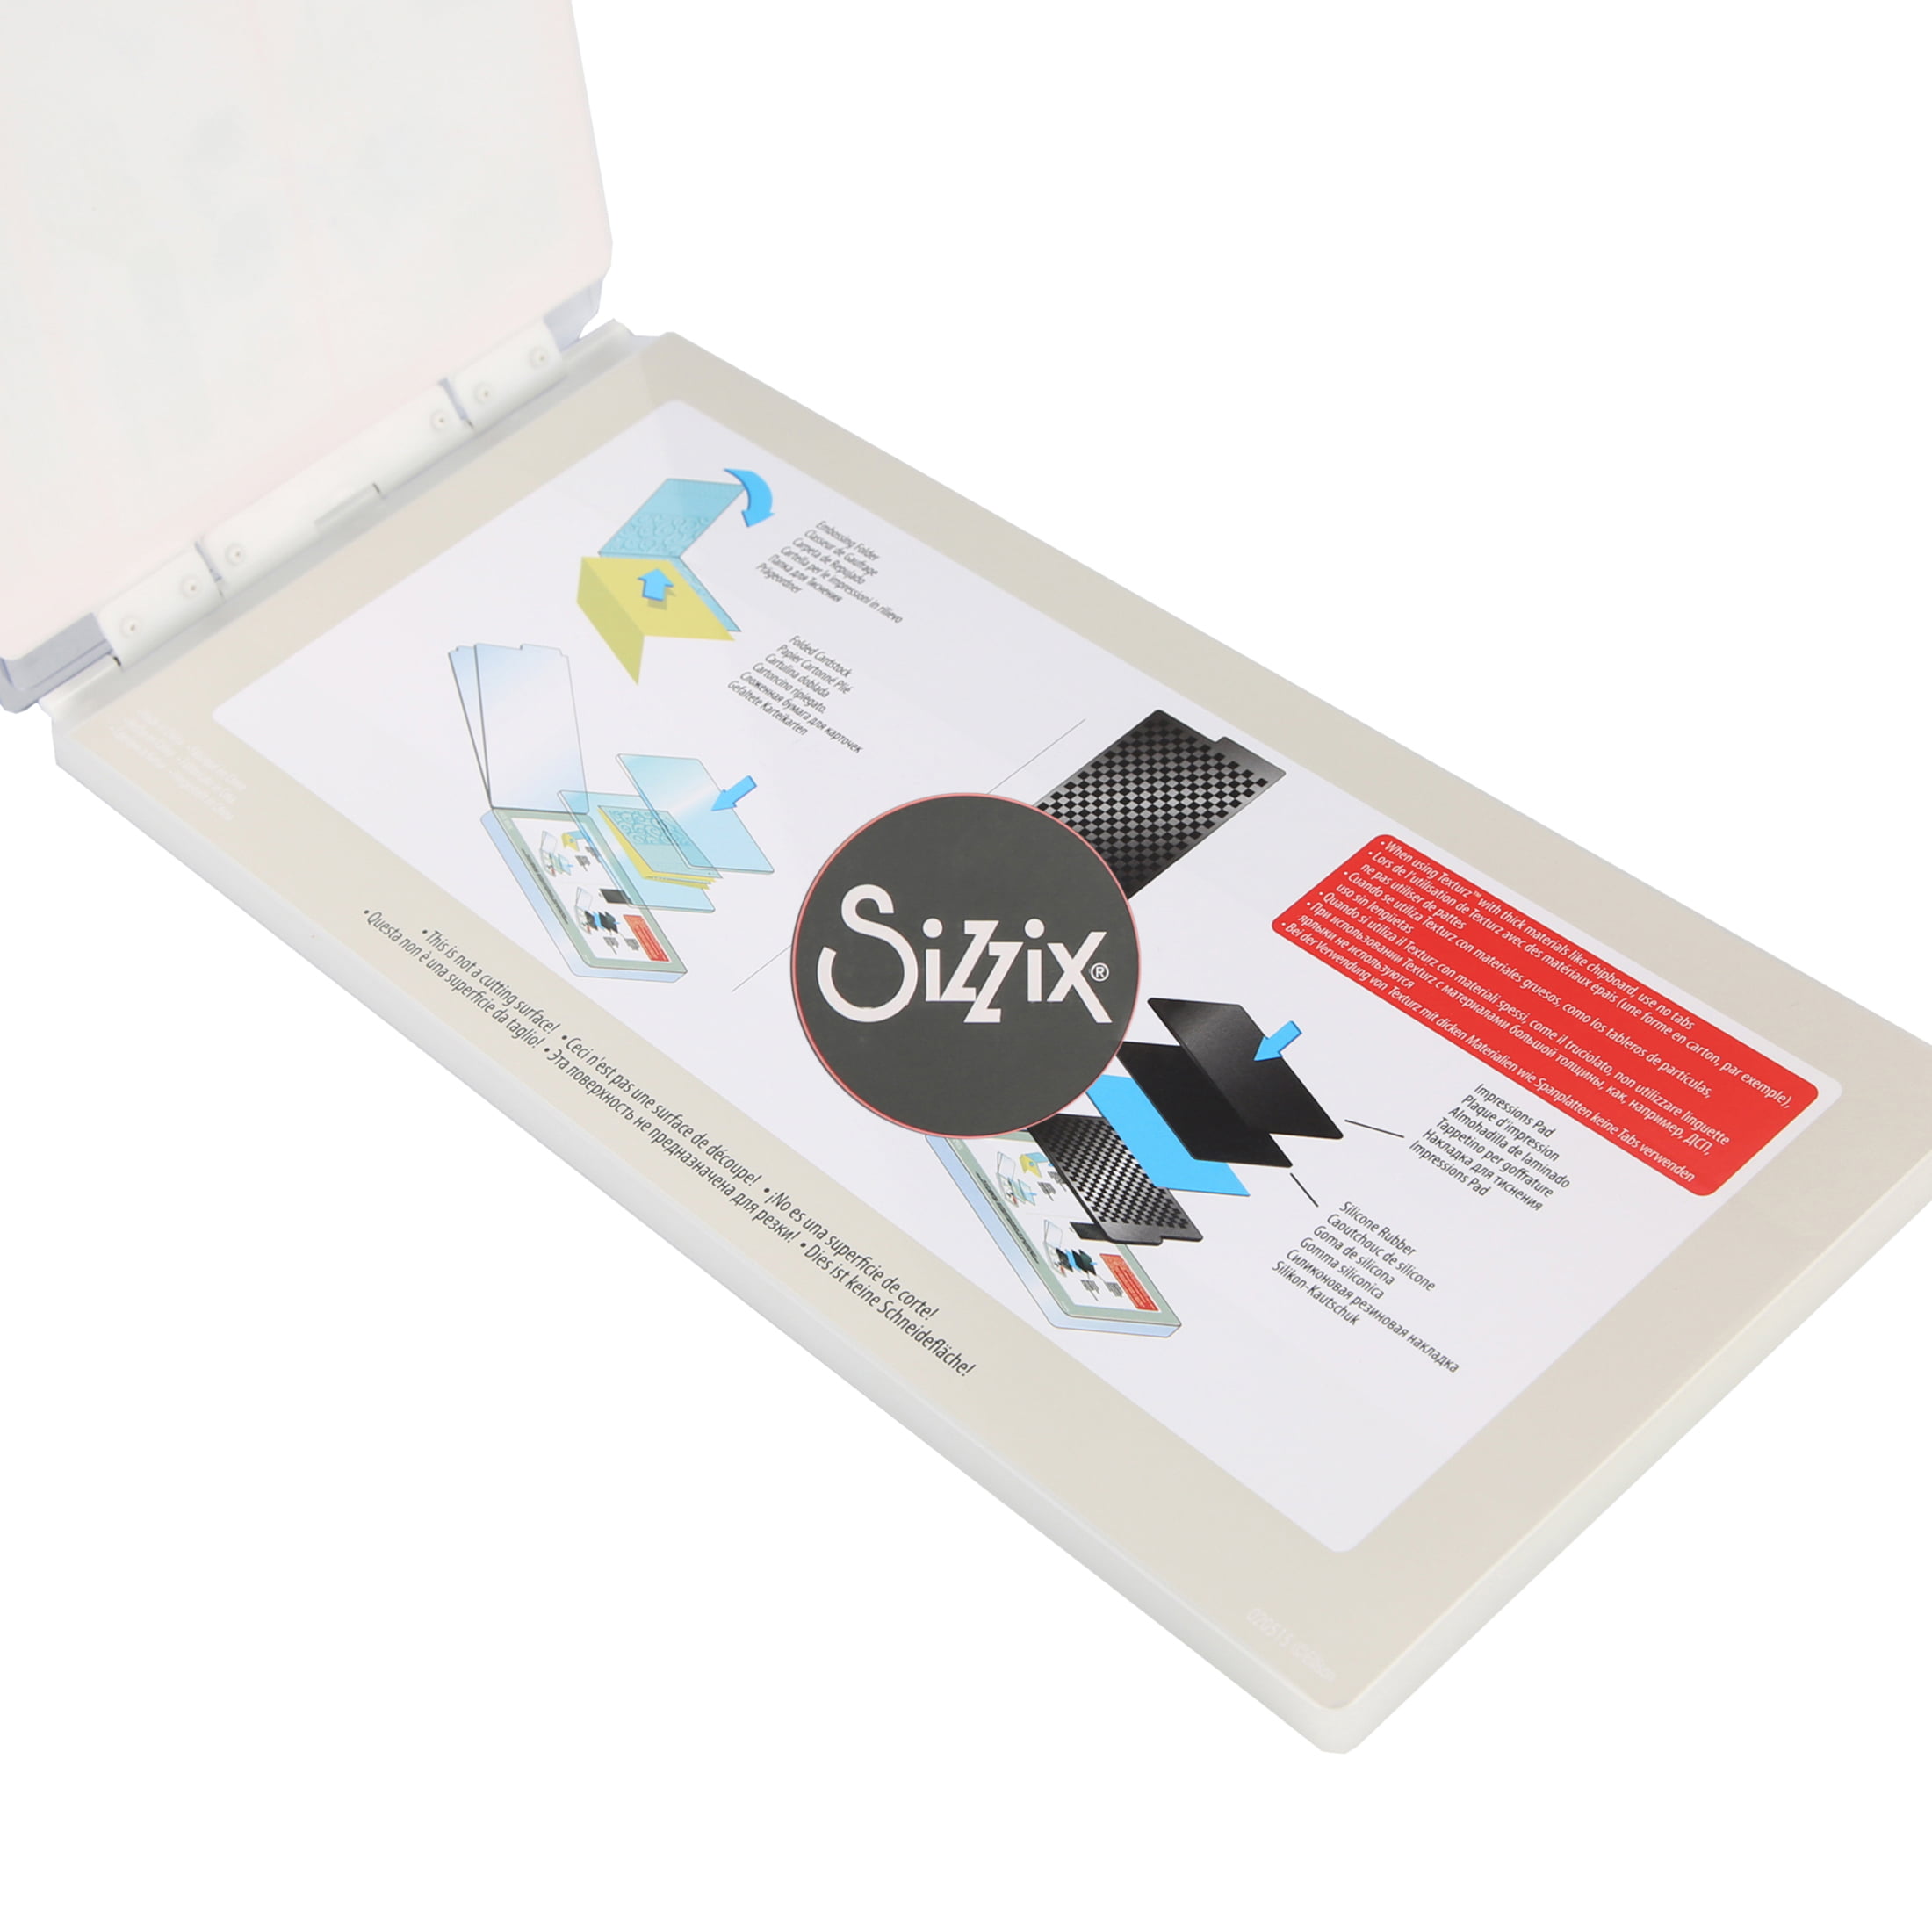 Sizzix Big Shot White and Grey + Exclusivo Kit Iniciação